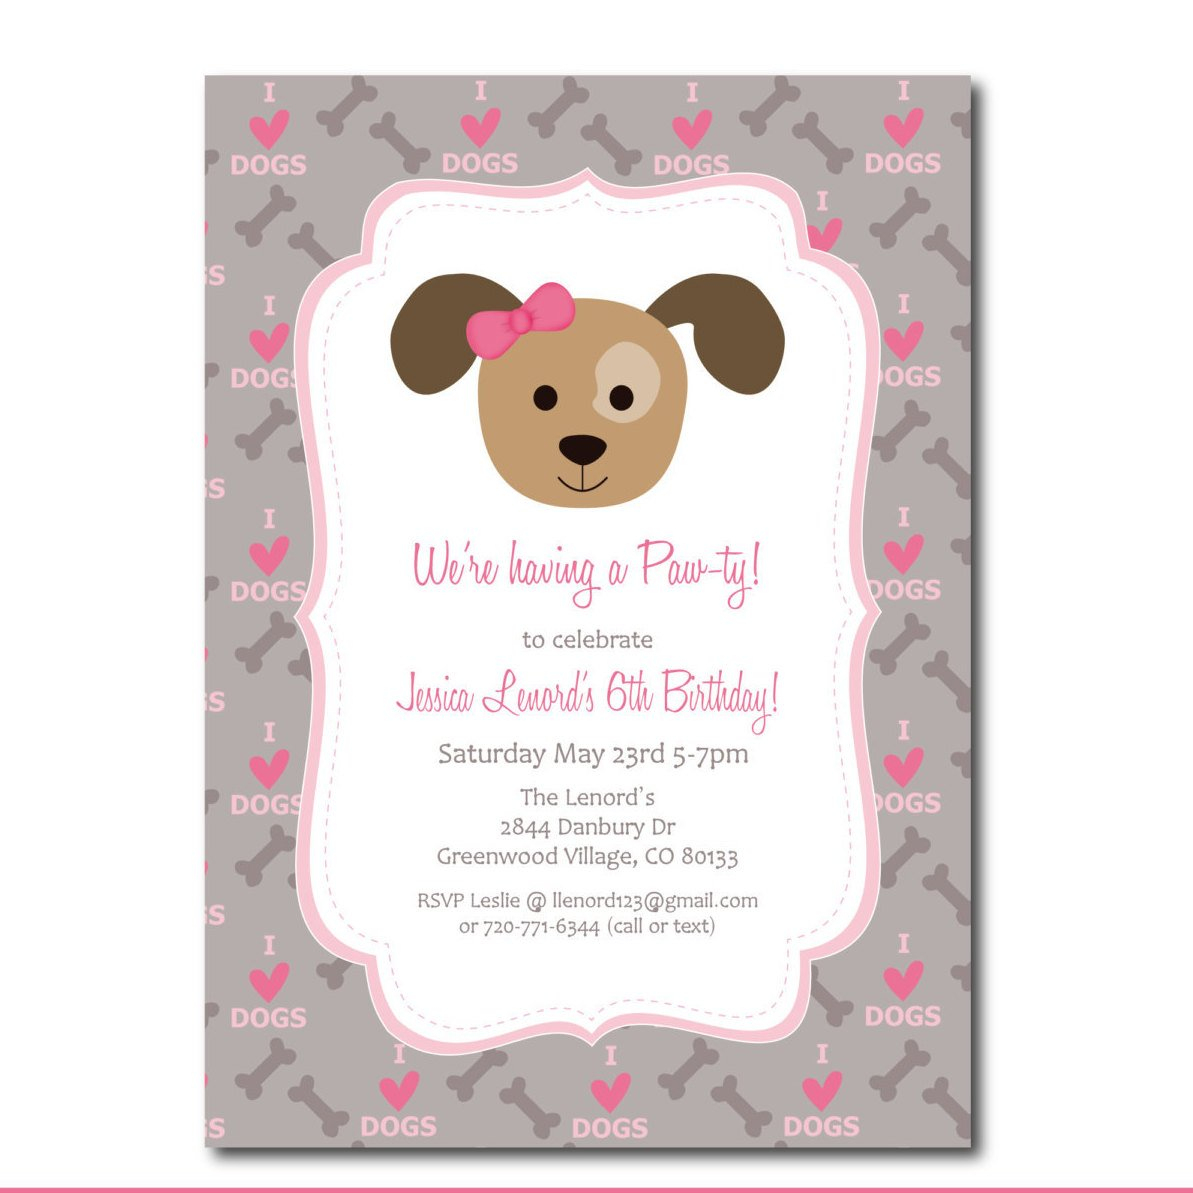 Puppy Shower Invitations Free Free Printable Puppy Shower Invitations - Dog Birthday Invitations Free Printable